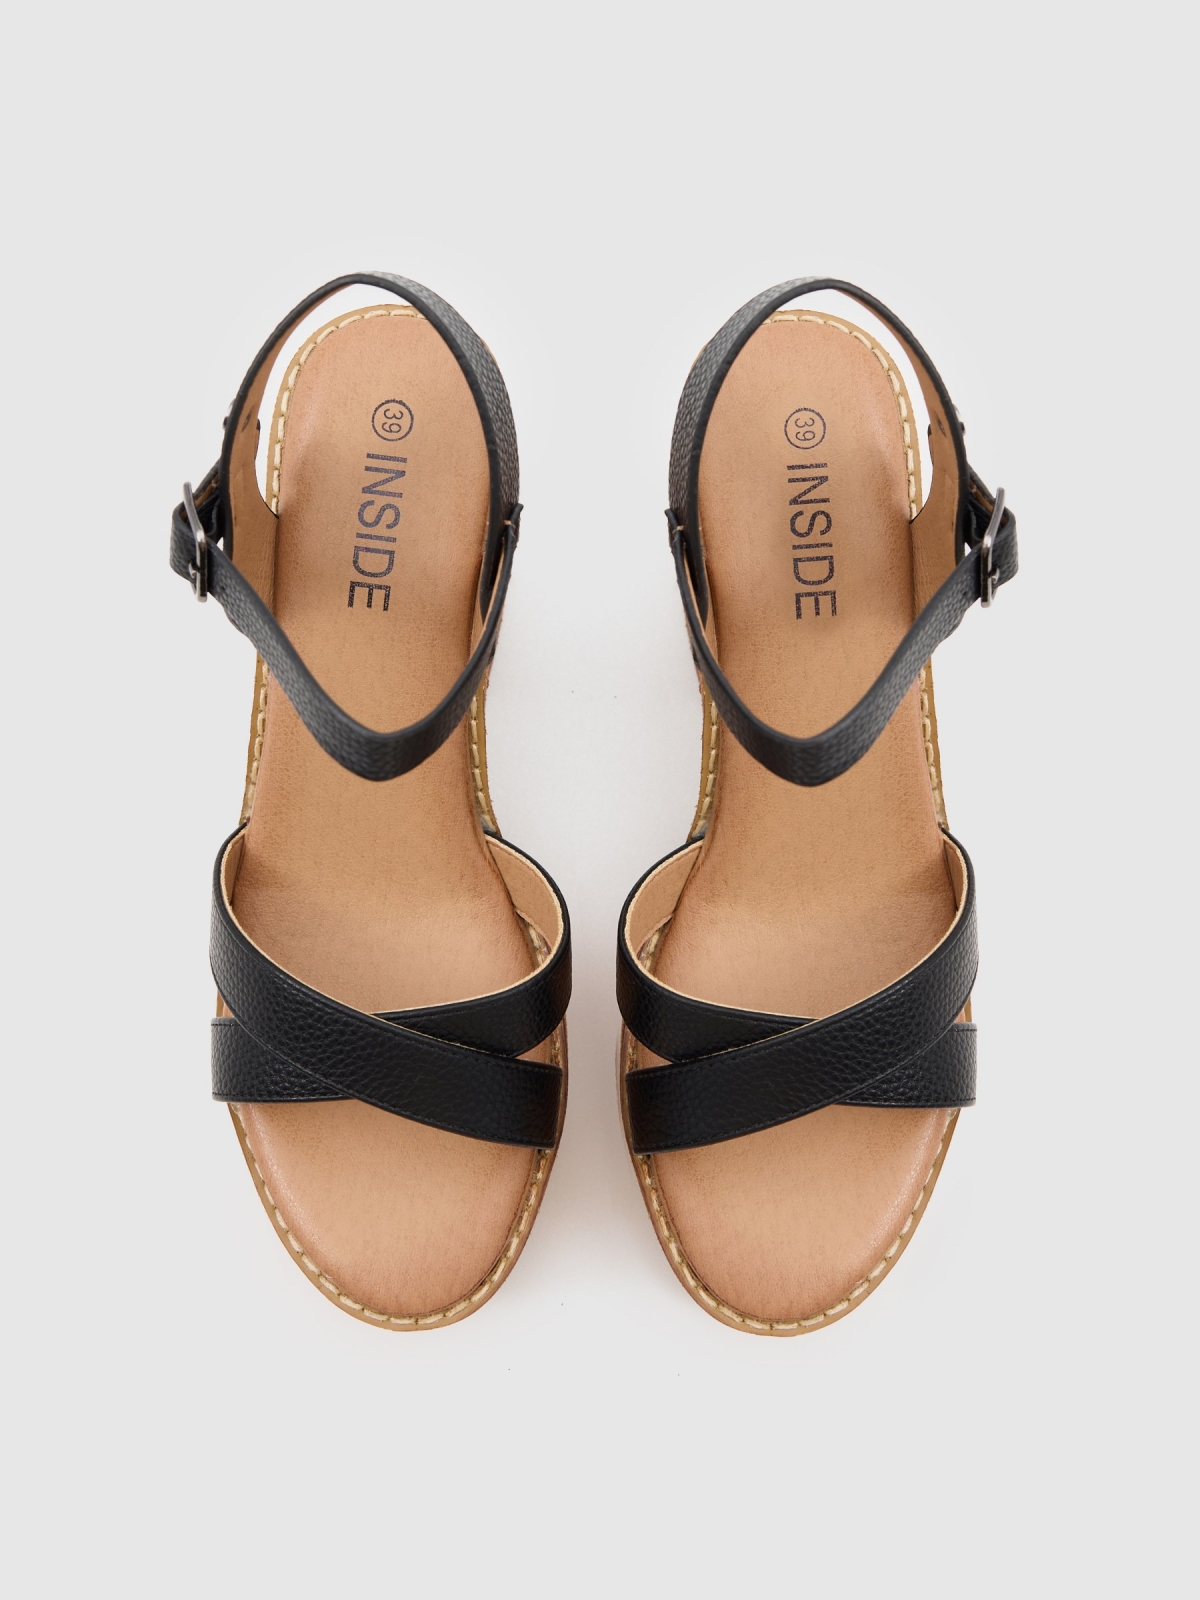 Sandals cross straps black/beige detail view